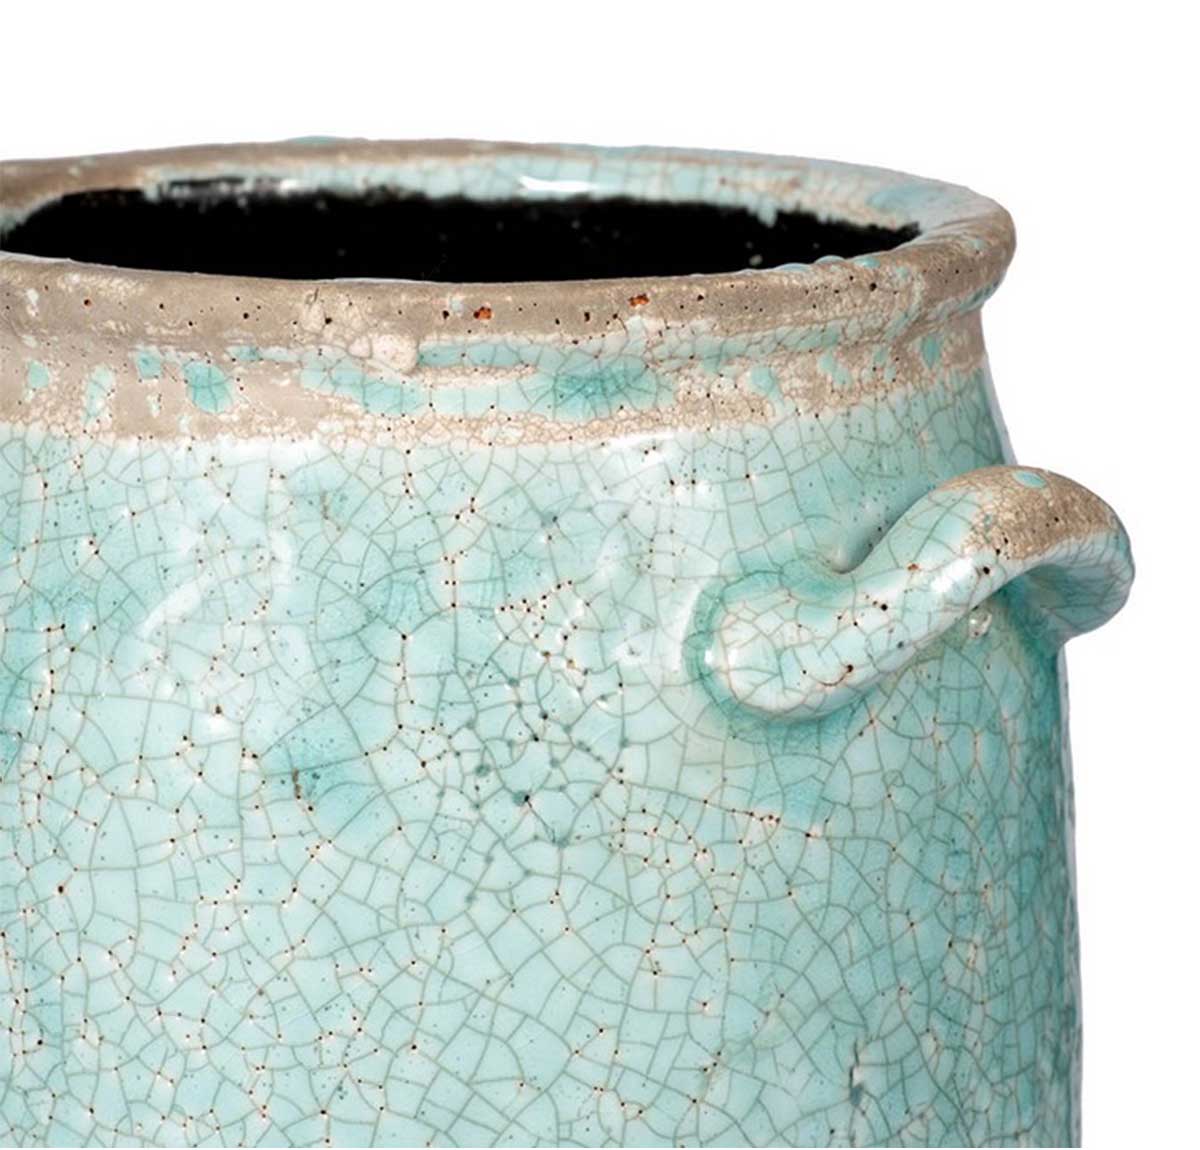 The Candia Ceramic Vase Small - Turquoise